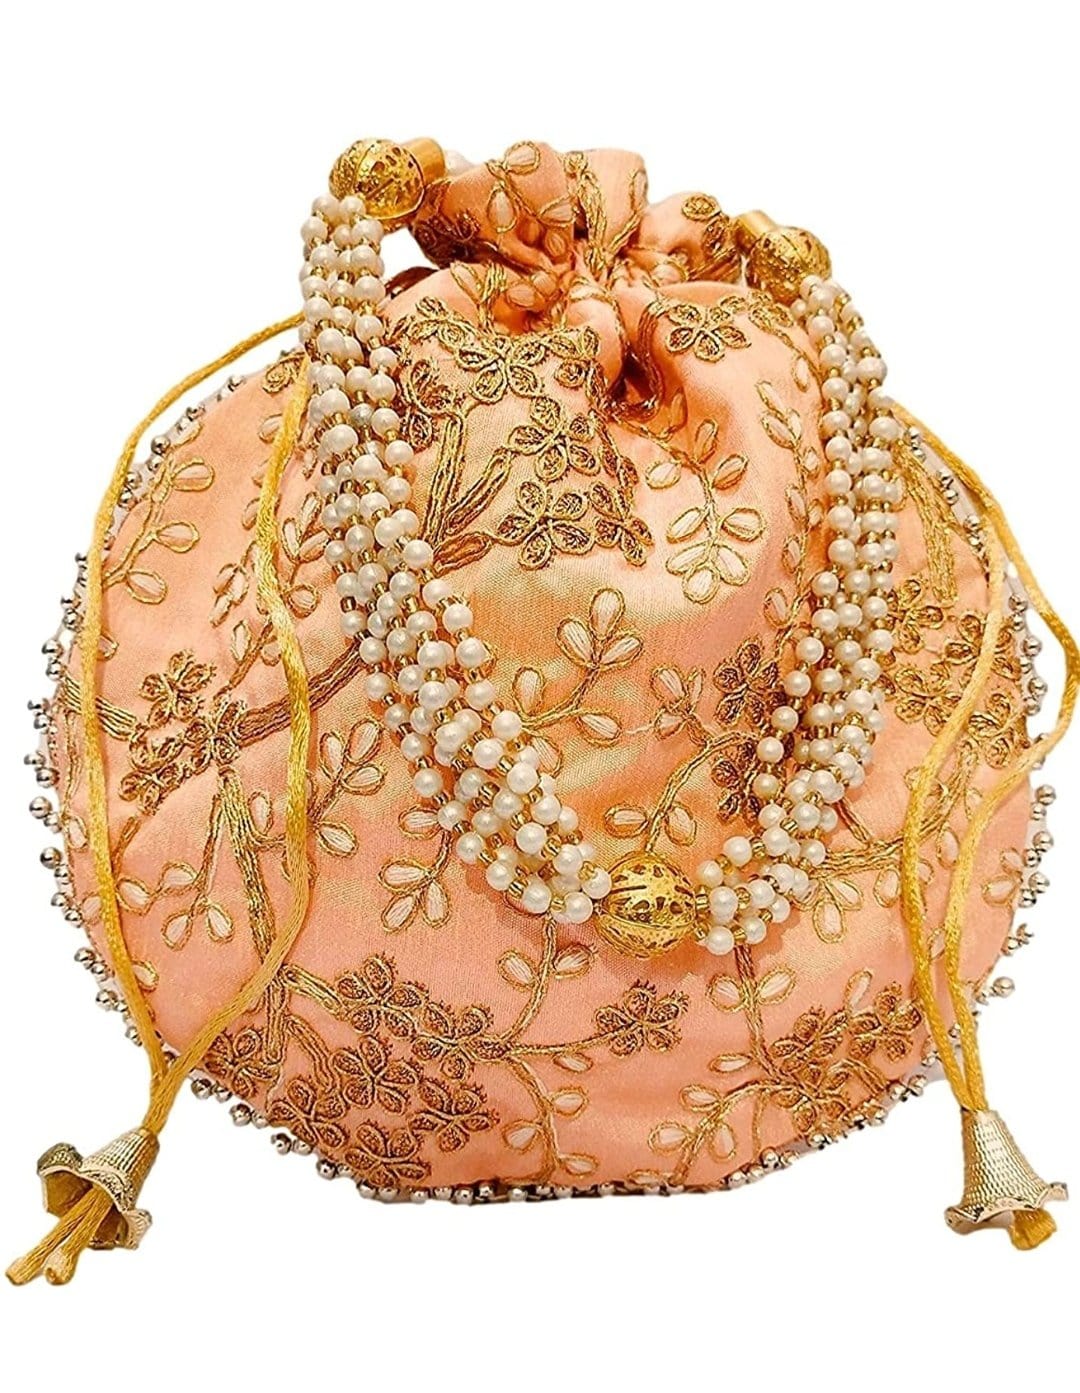 LAMANSH ® Women's Potli Bag LAMANSH 4 Pcs Potli bags for women handbags traditional Indian Wristlet with Drawstring Ethnic Embroidery Women Fashion Potli